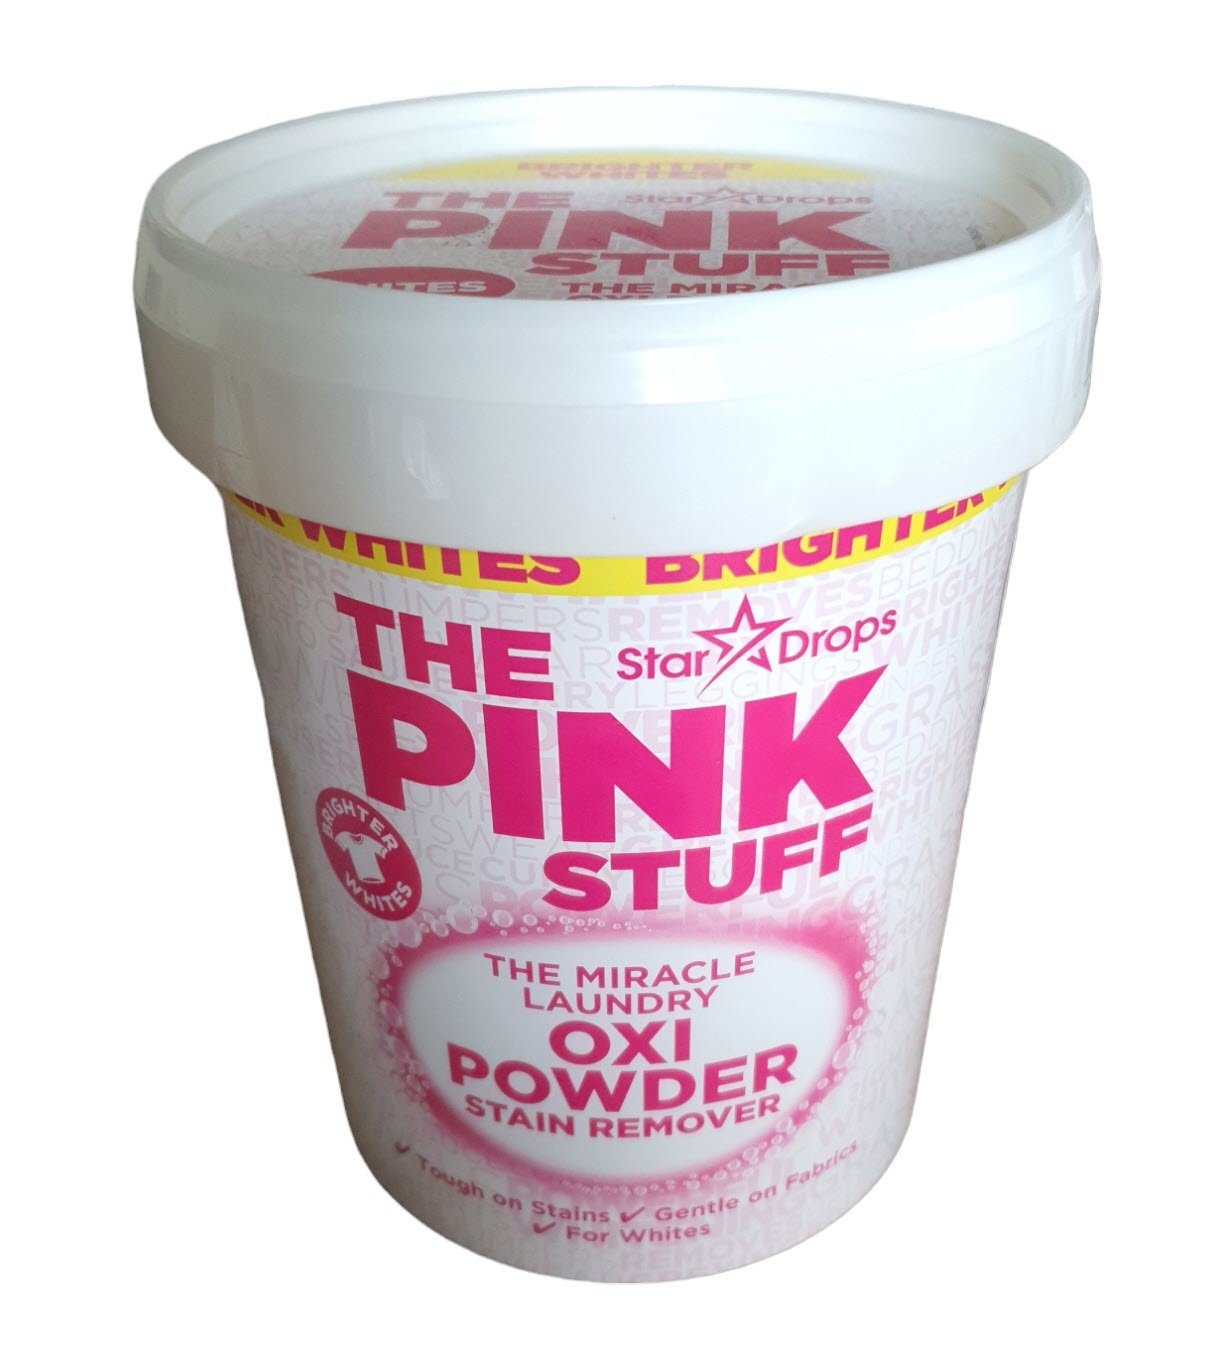 1 Stuff The Pink Pink Fleckentferner Powder weiss Stuff kg Fleckenentferner Oxi The